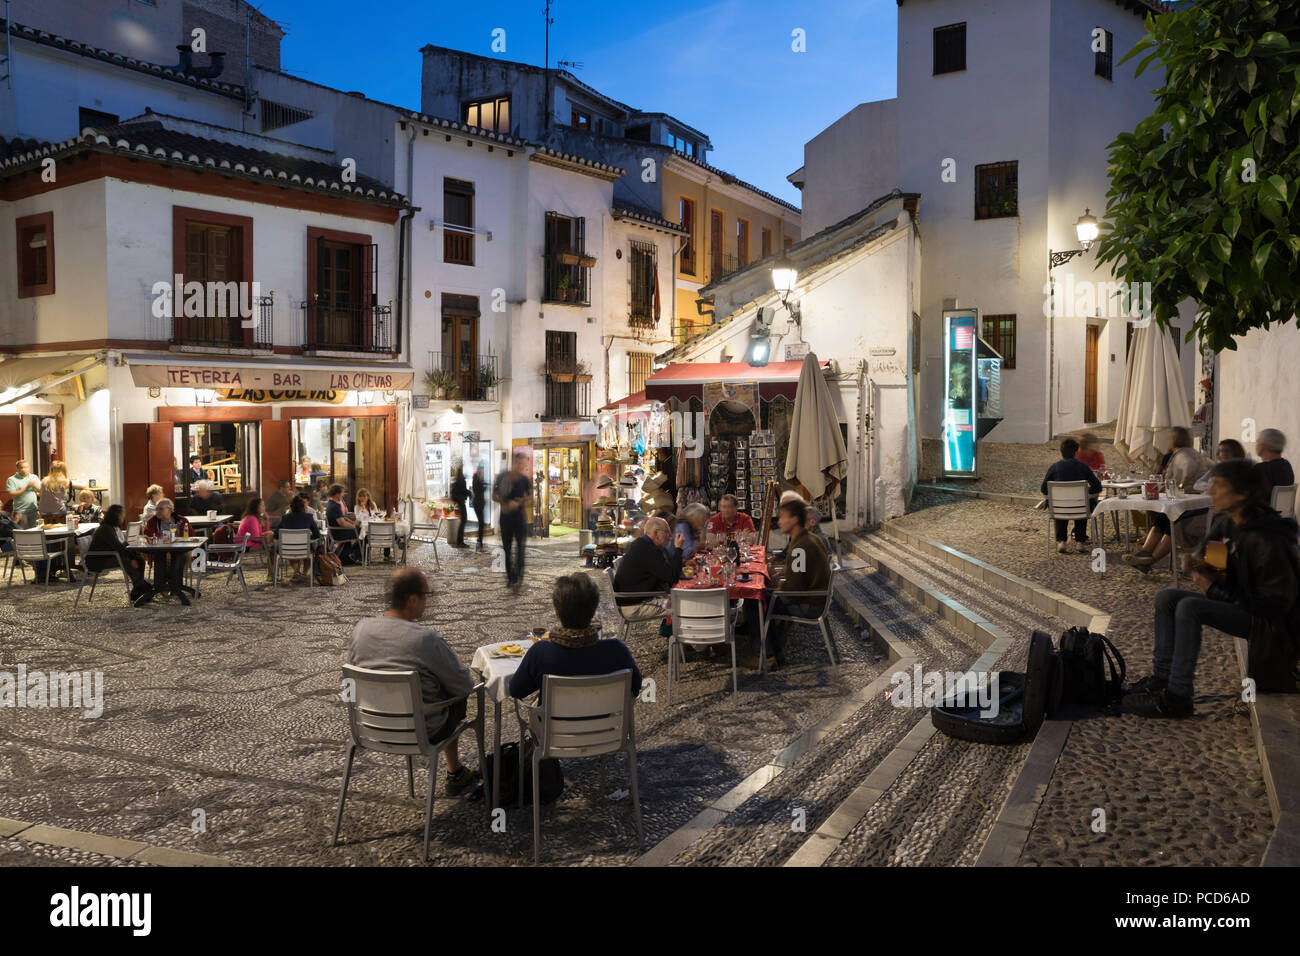 Am Abend Restaurants in der Placeta De San Gregorio, Albaicin, Granada, Andalusien, Spanien, Europa Stockfoto